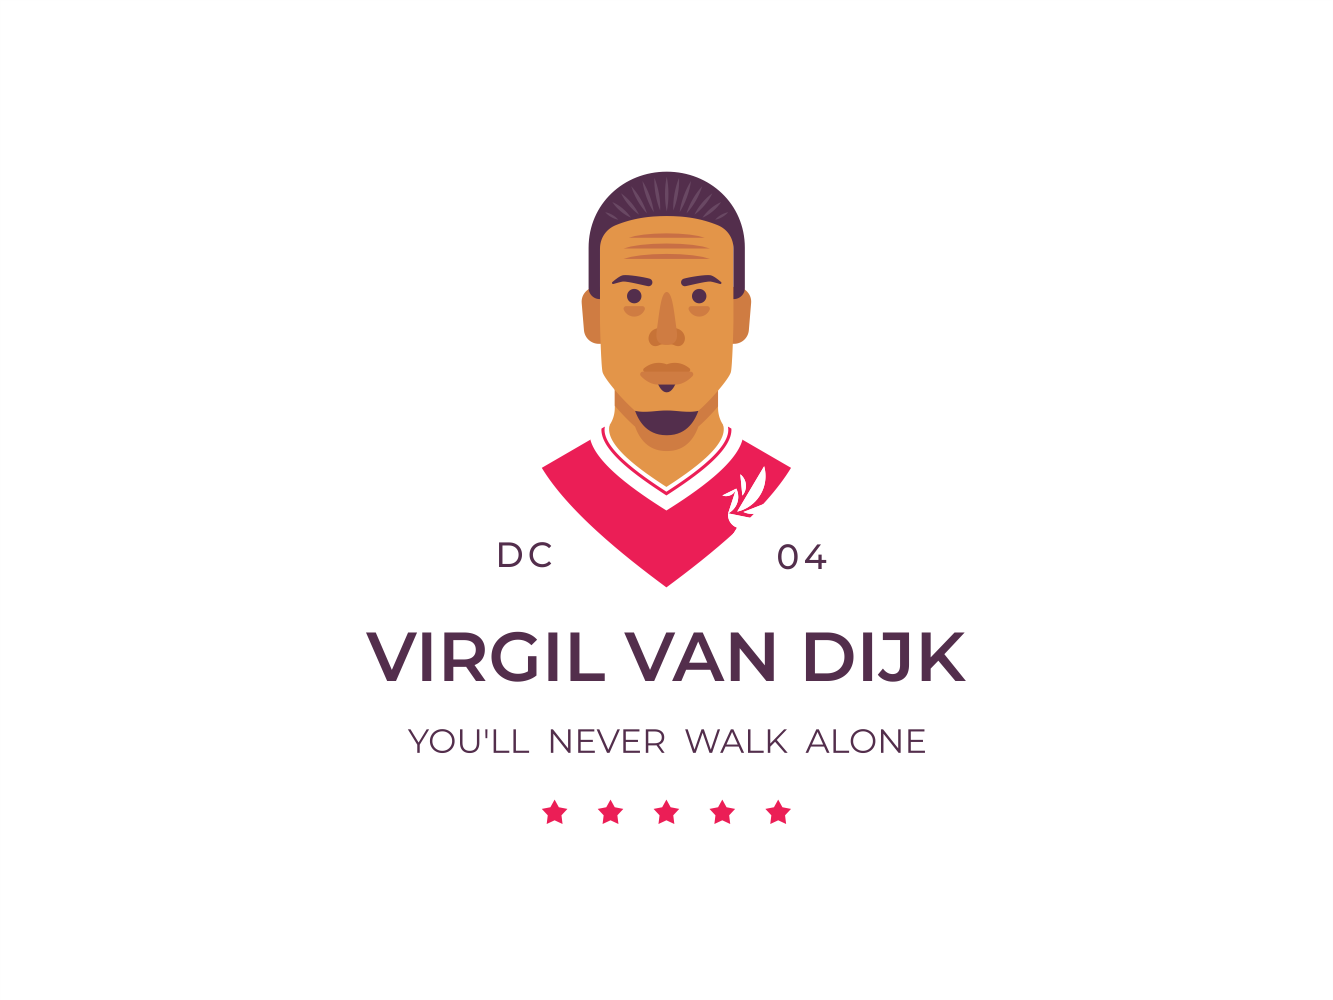 Virgil van Dijk by IIsixo_O on Dribbble